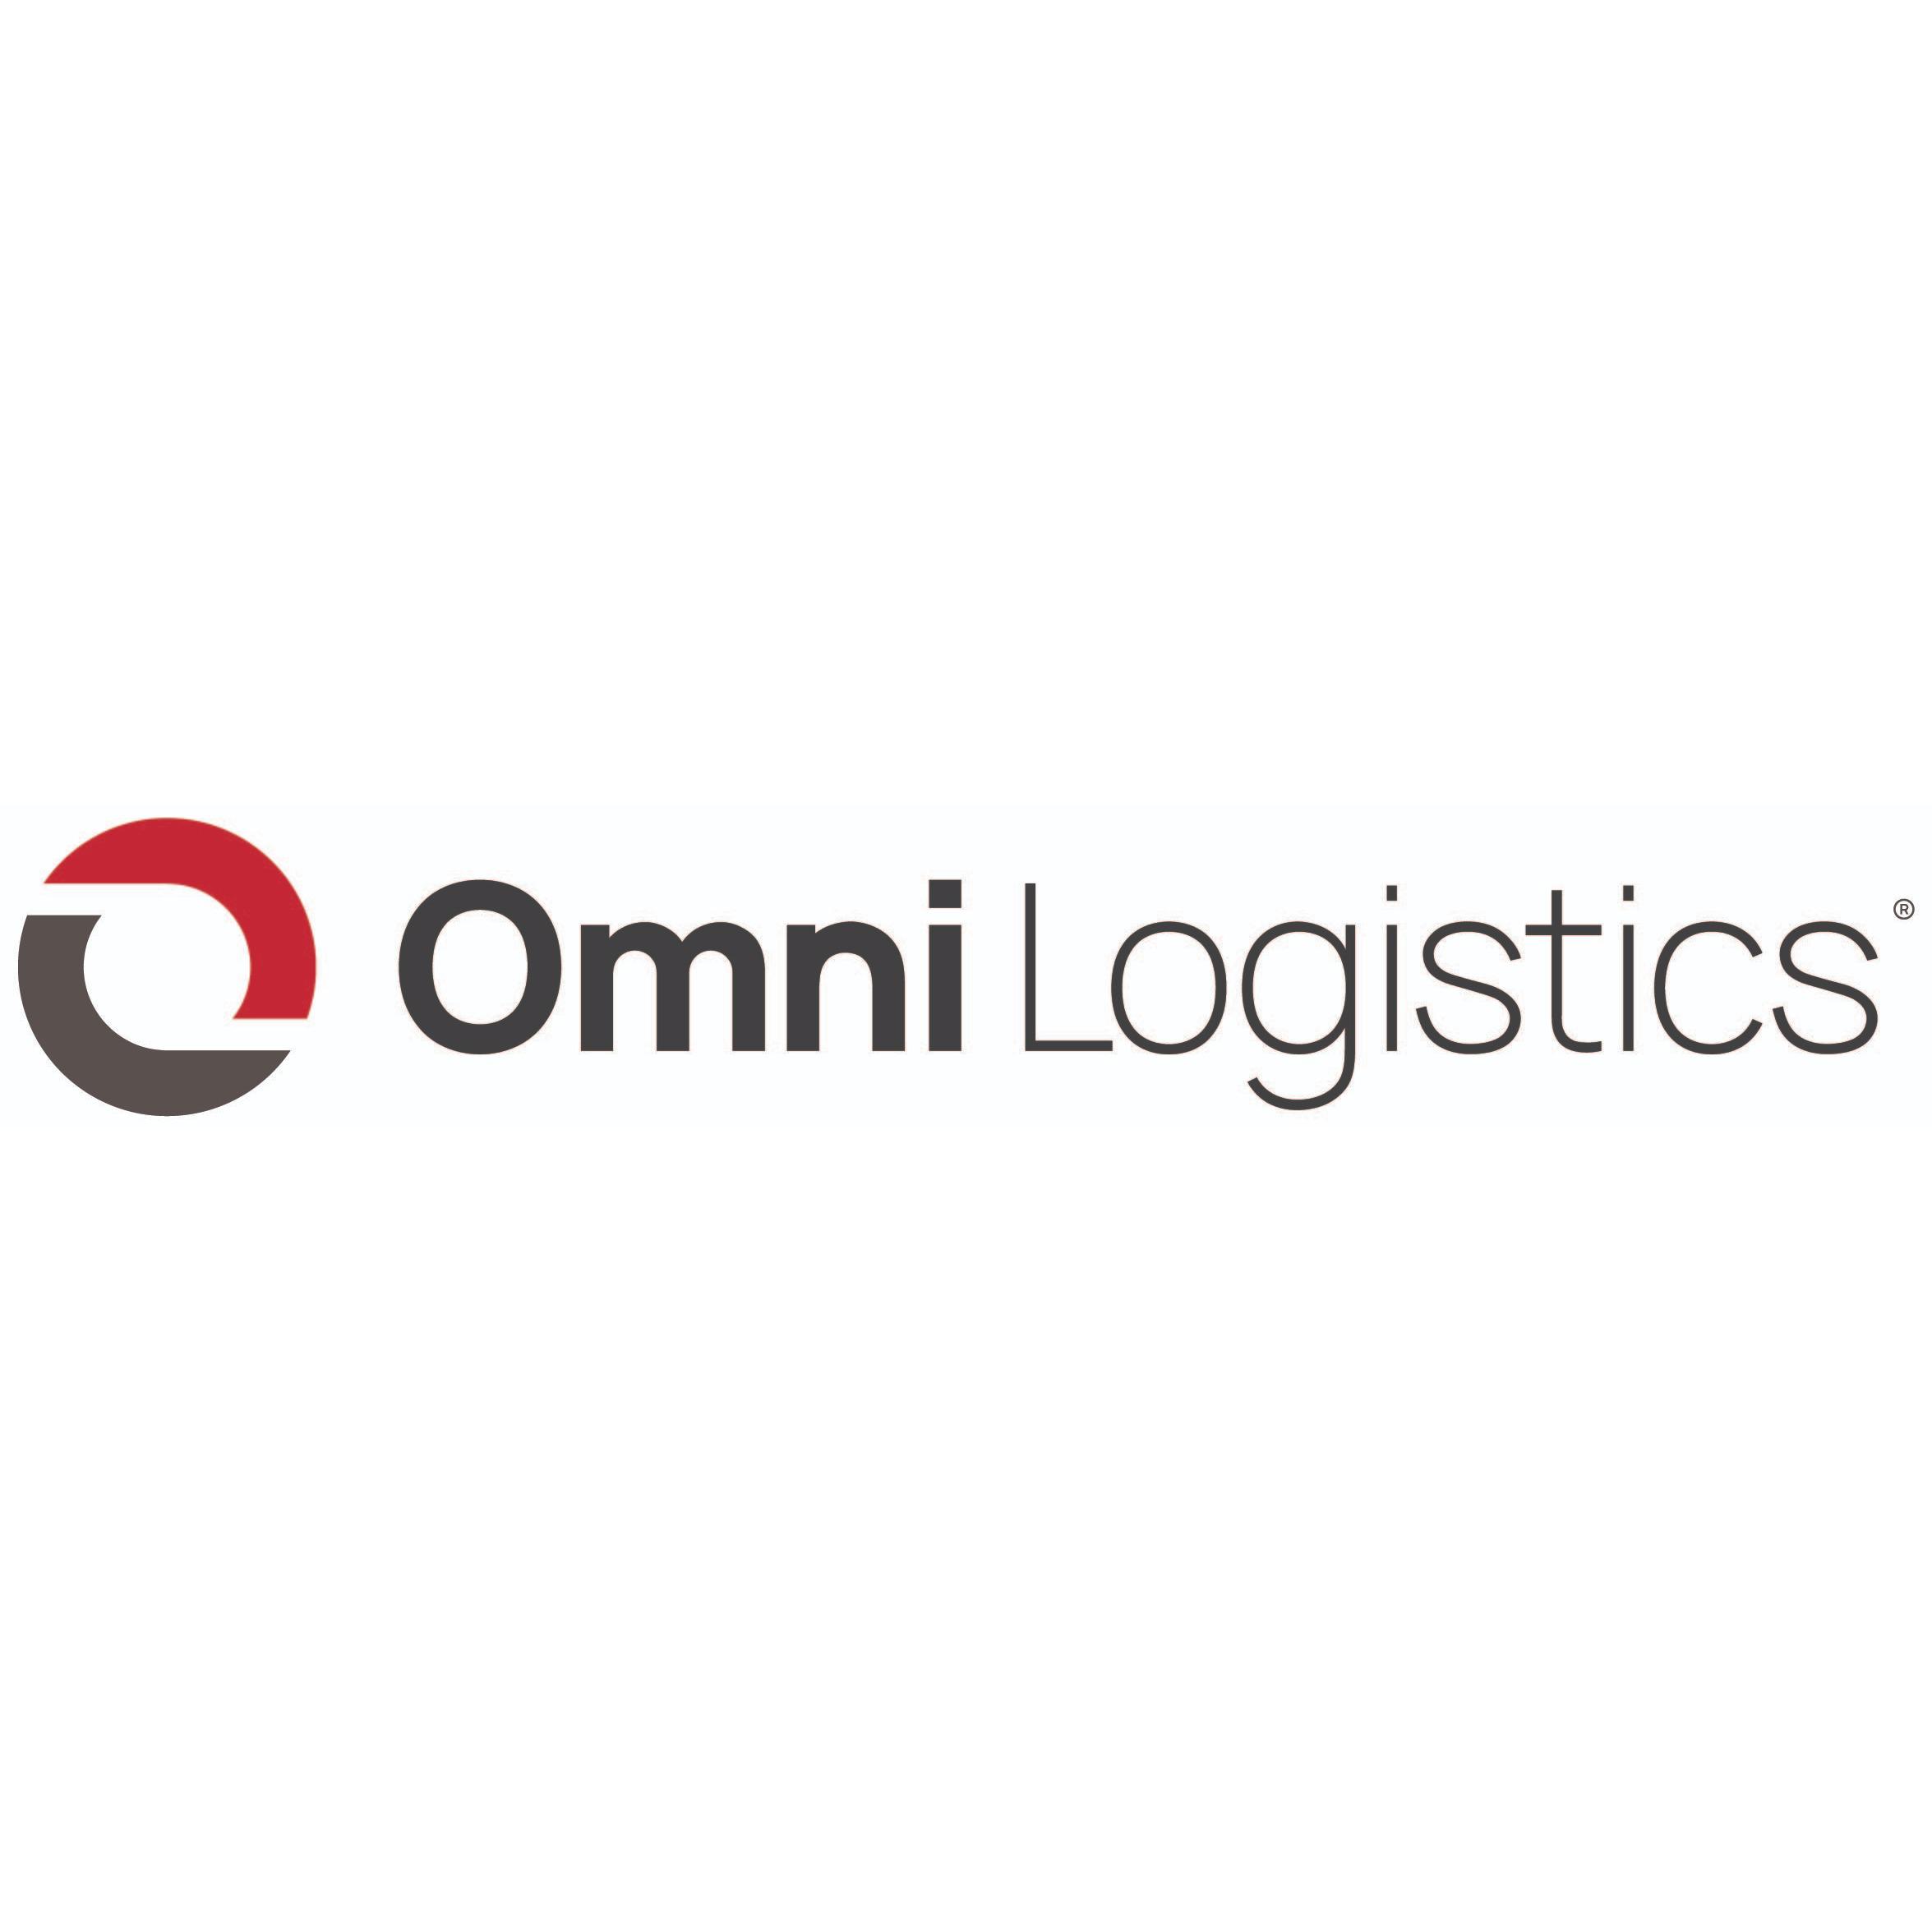 Omni Logistics horizontal logo Omni Logistics - Dallas Campus Euless (817)410-9225